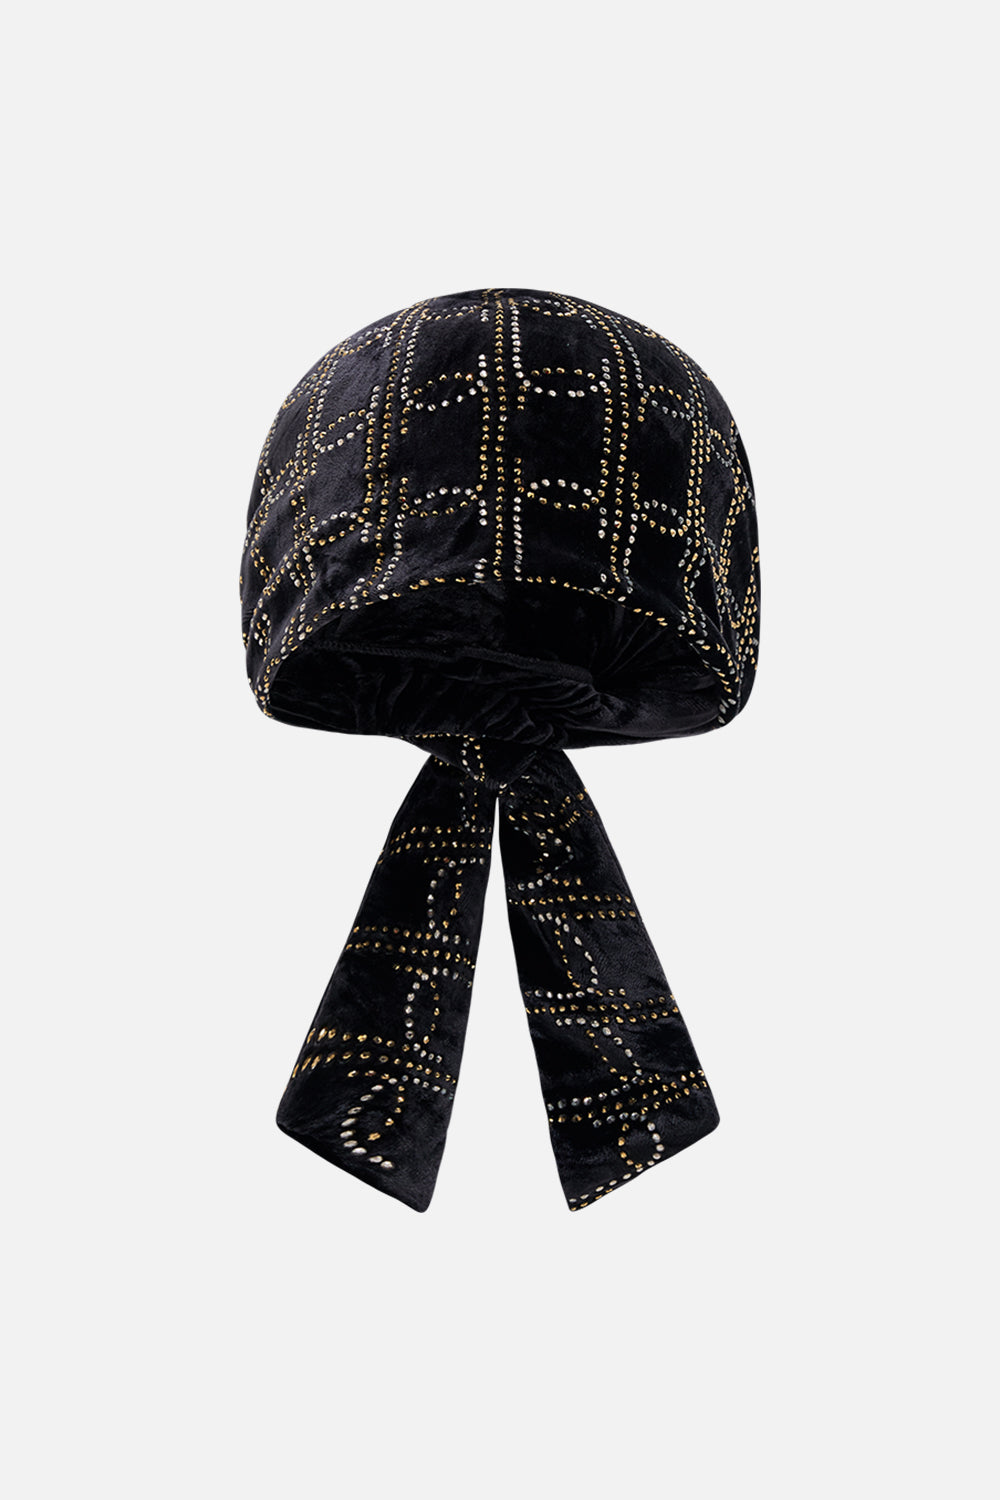 CANMILLA black velvet headscarf print 